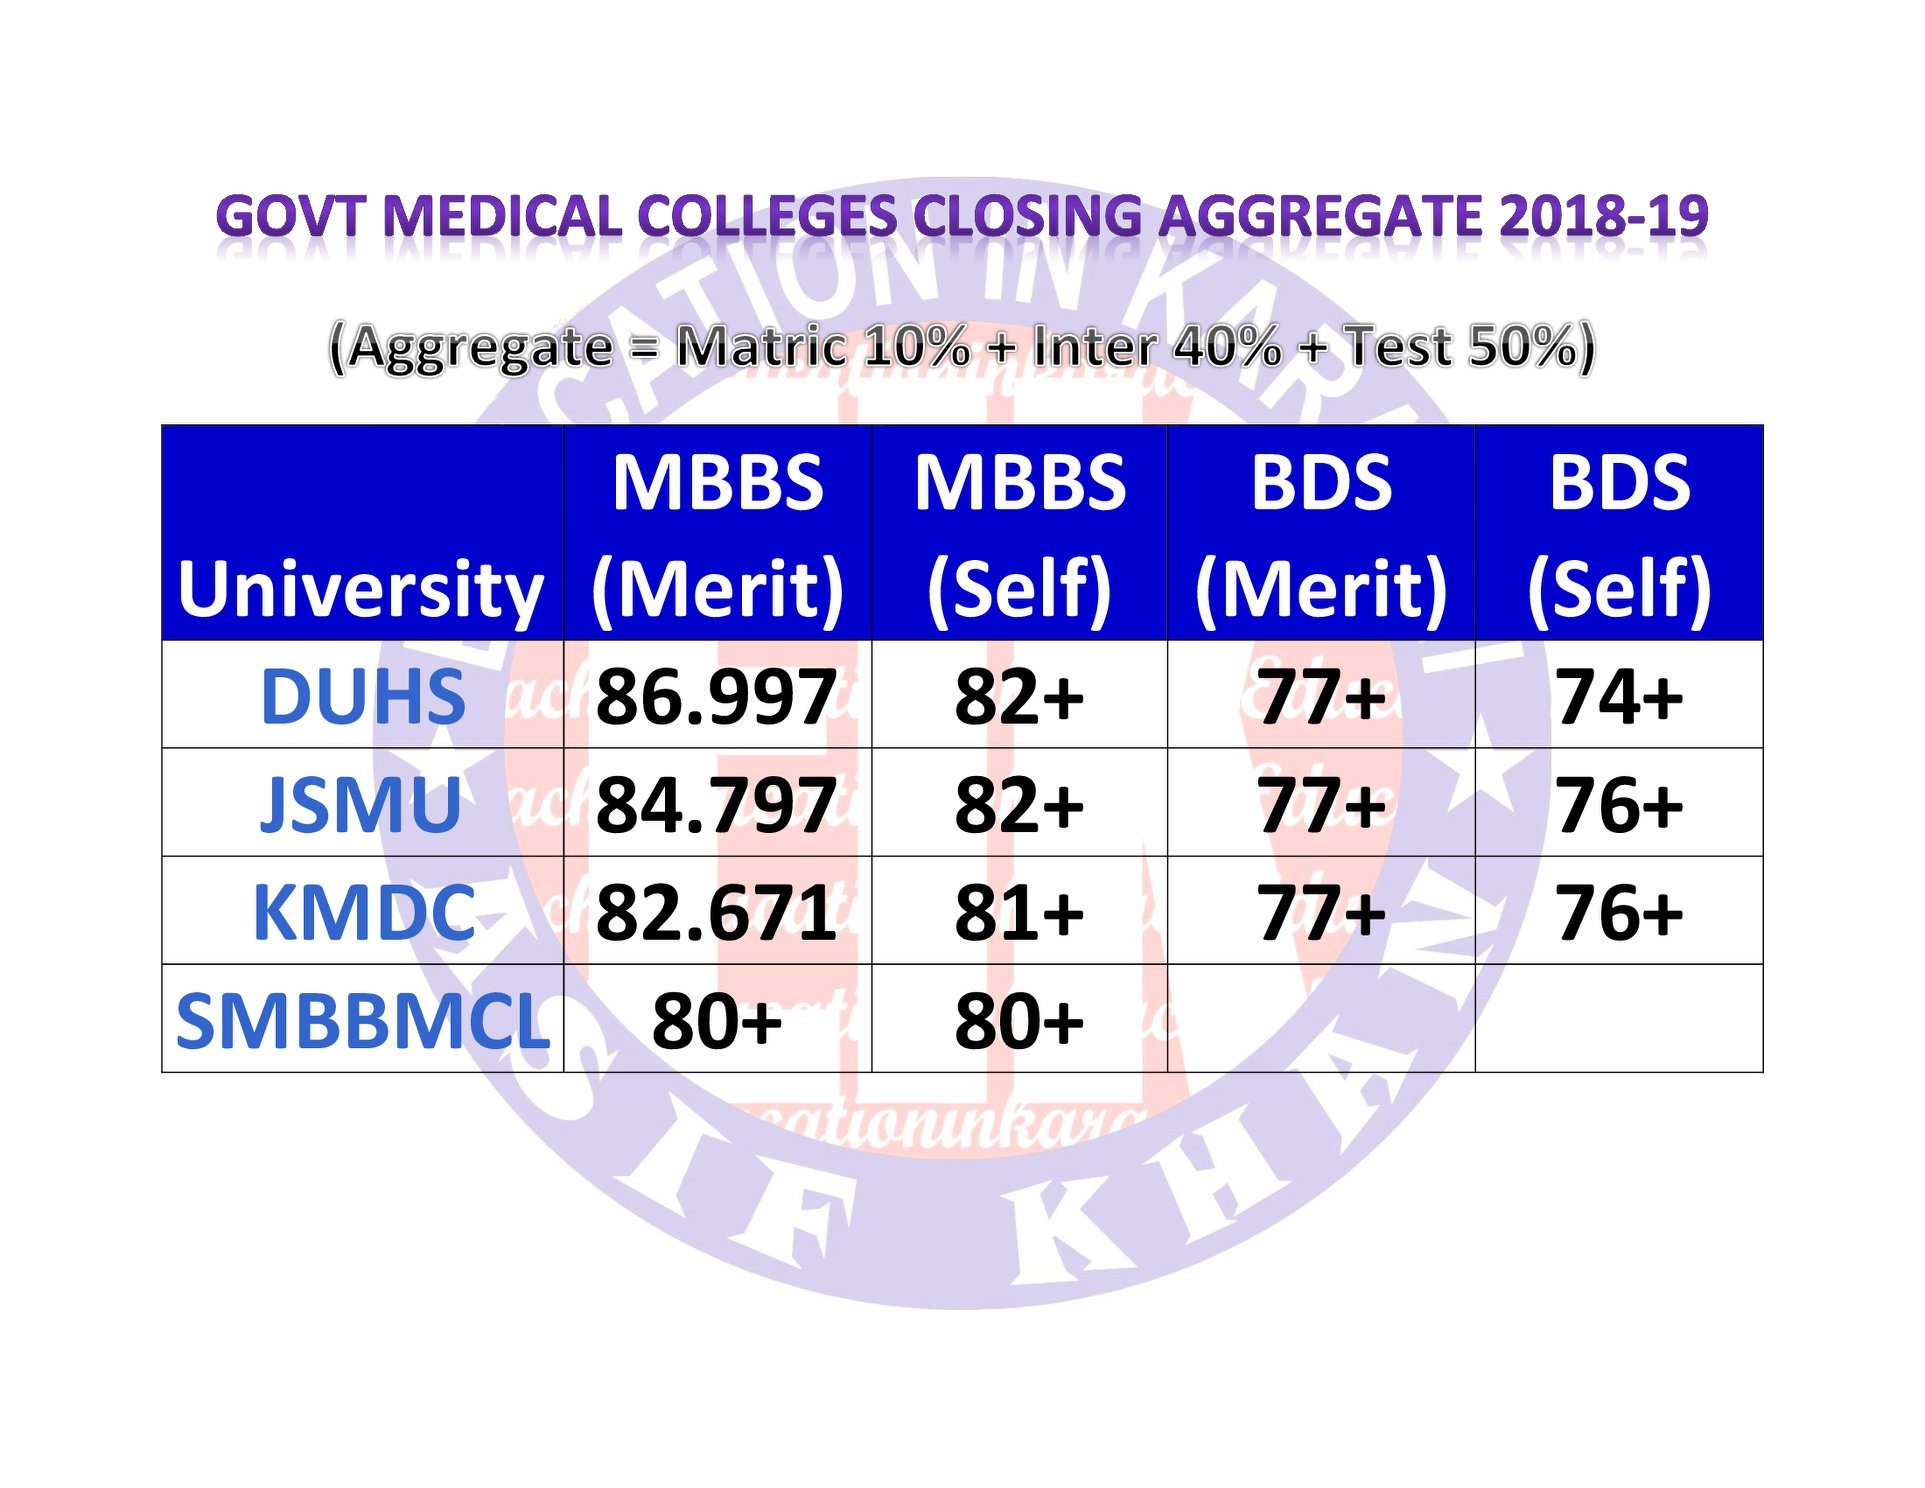 Govt Medical Colleges (DMC.SMC.KMDC.LMC) Last Year Closing Aggregate